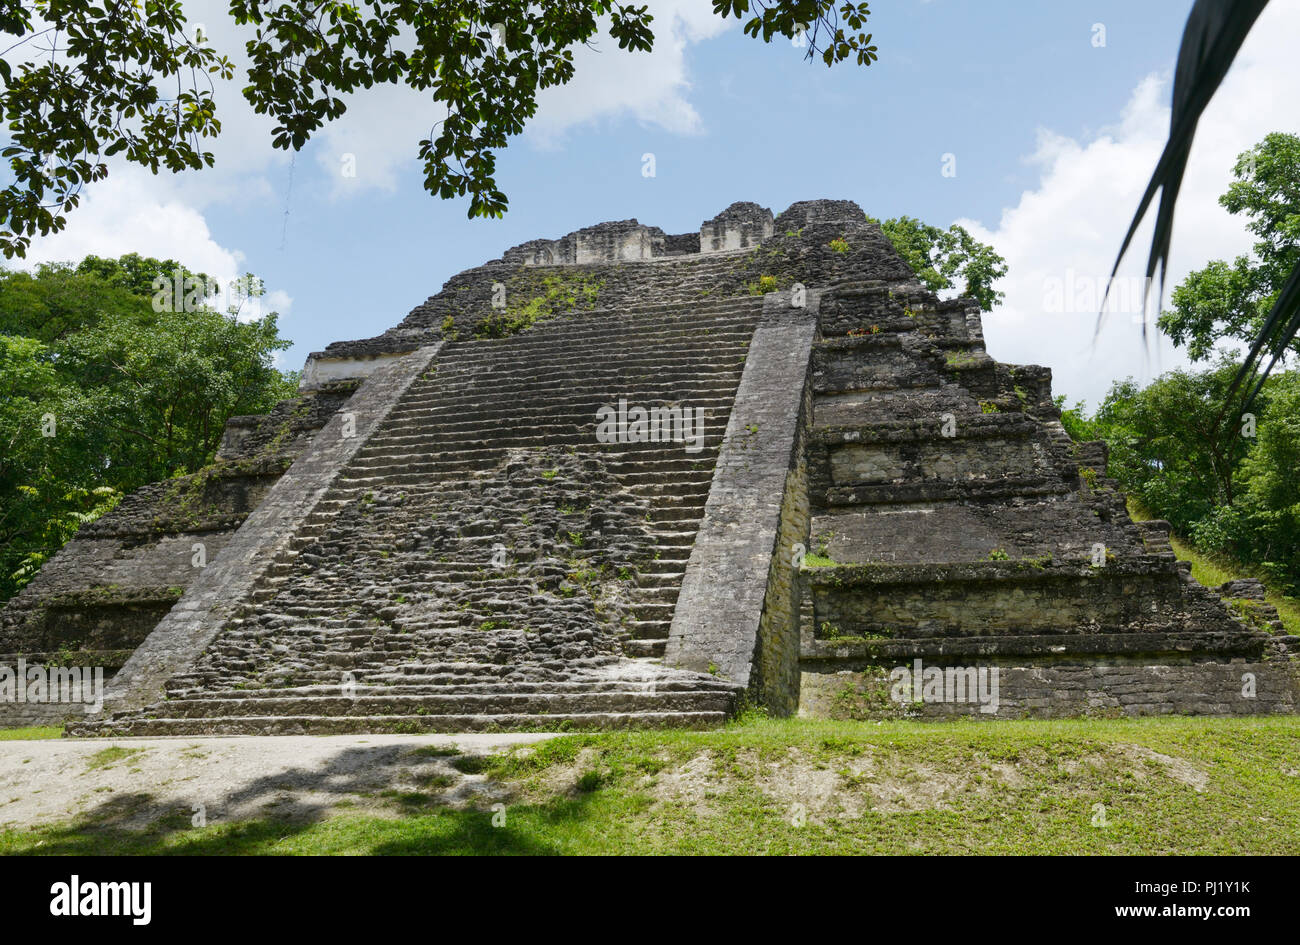 Temple Talud Tablero, Tikal, Guatemala Mayan ruins Stock Photo